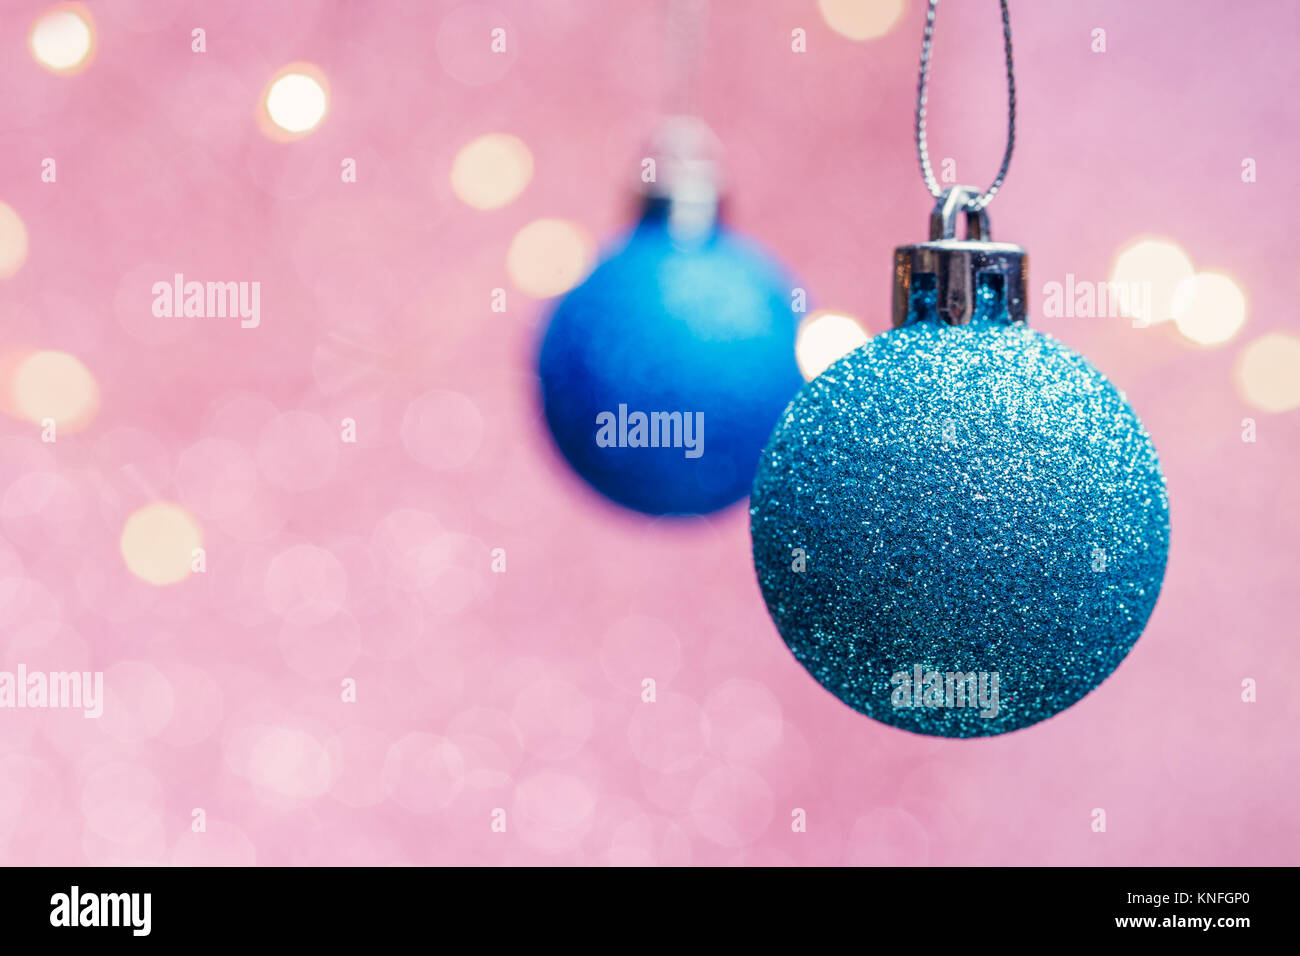 Holiday Lights Brighten Von Maur Department Editorial Stock Photo - Stock  Image